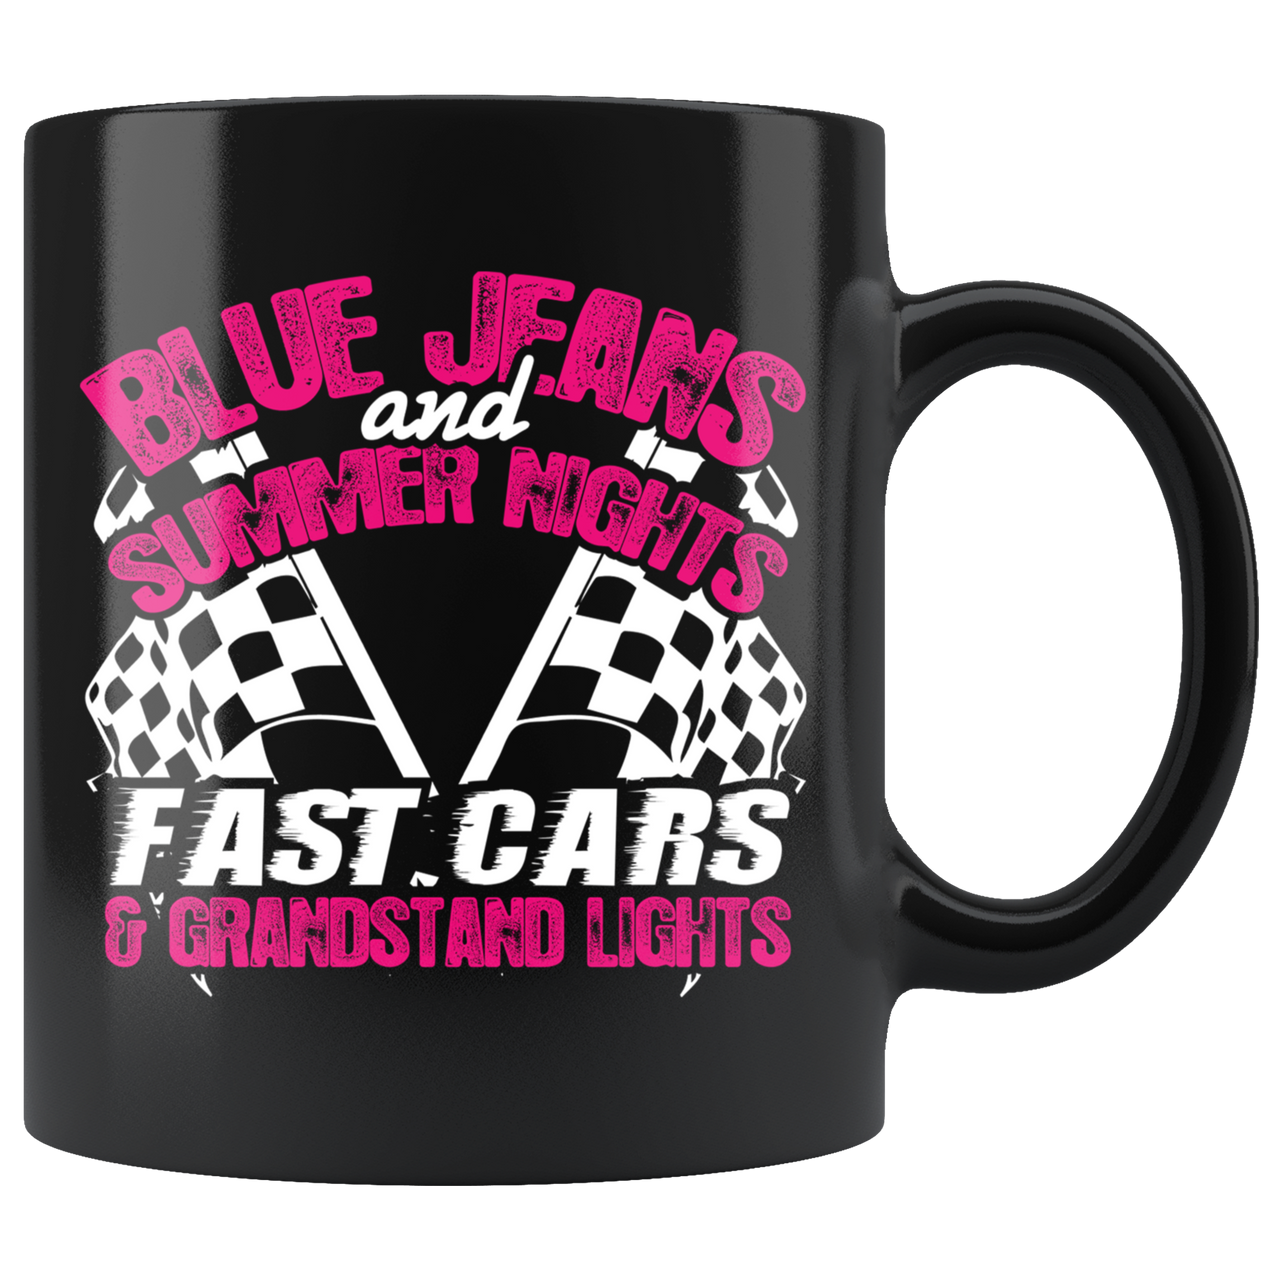 Blue Jeans And Summer Night Fast Cars & Grandstand Lights Mug!